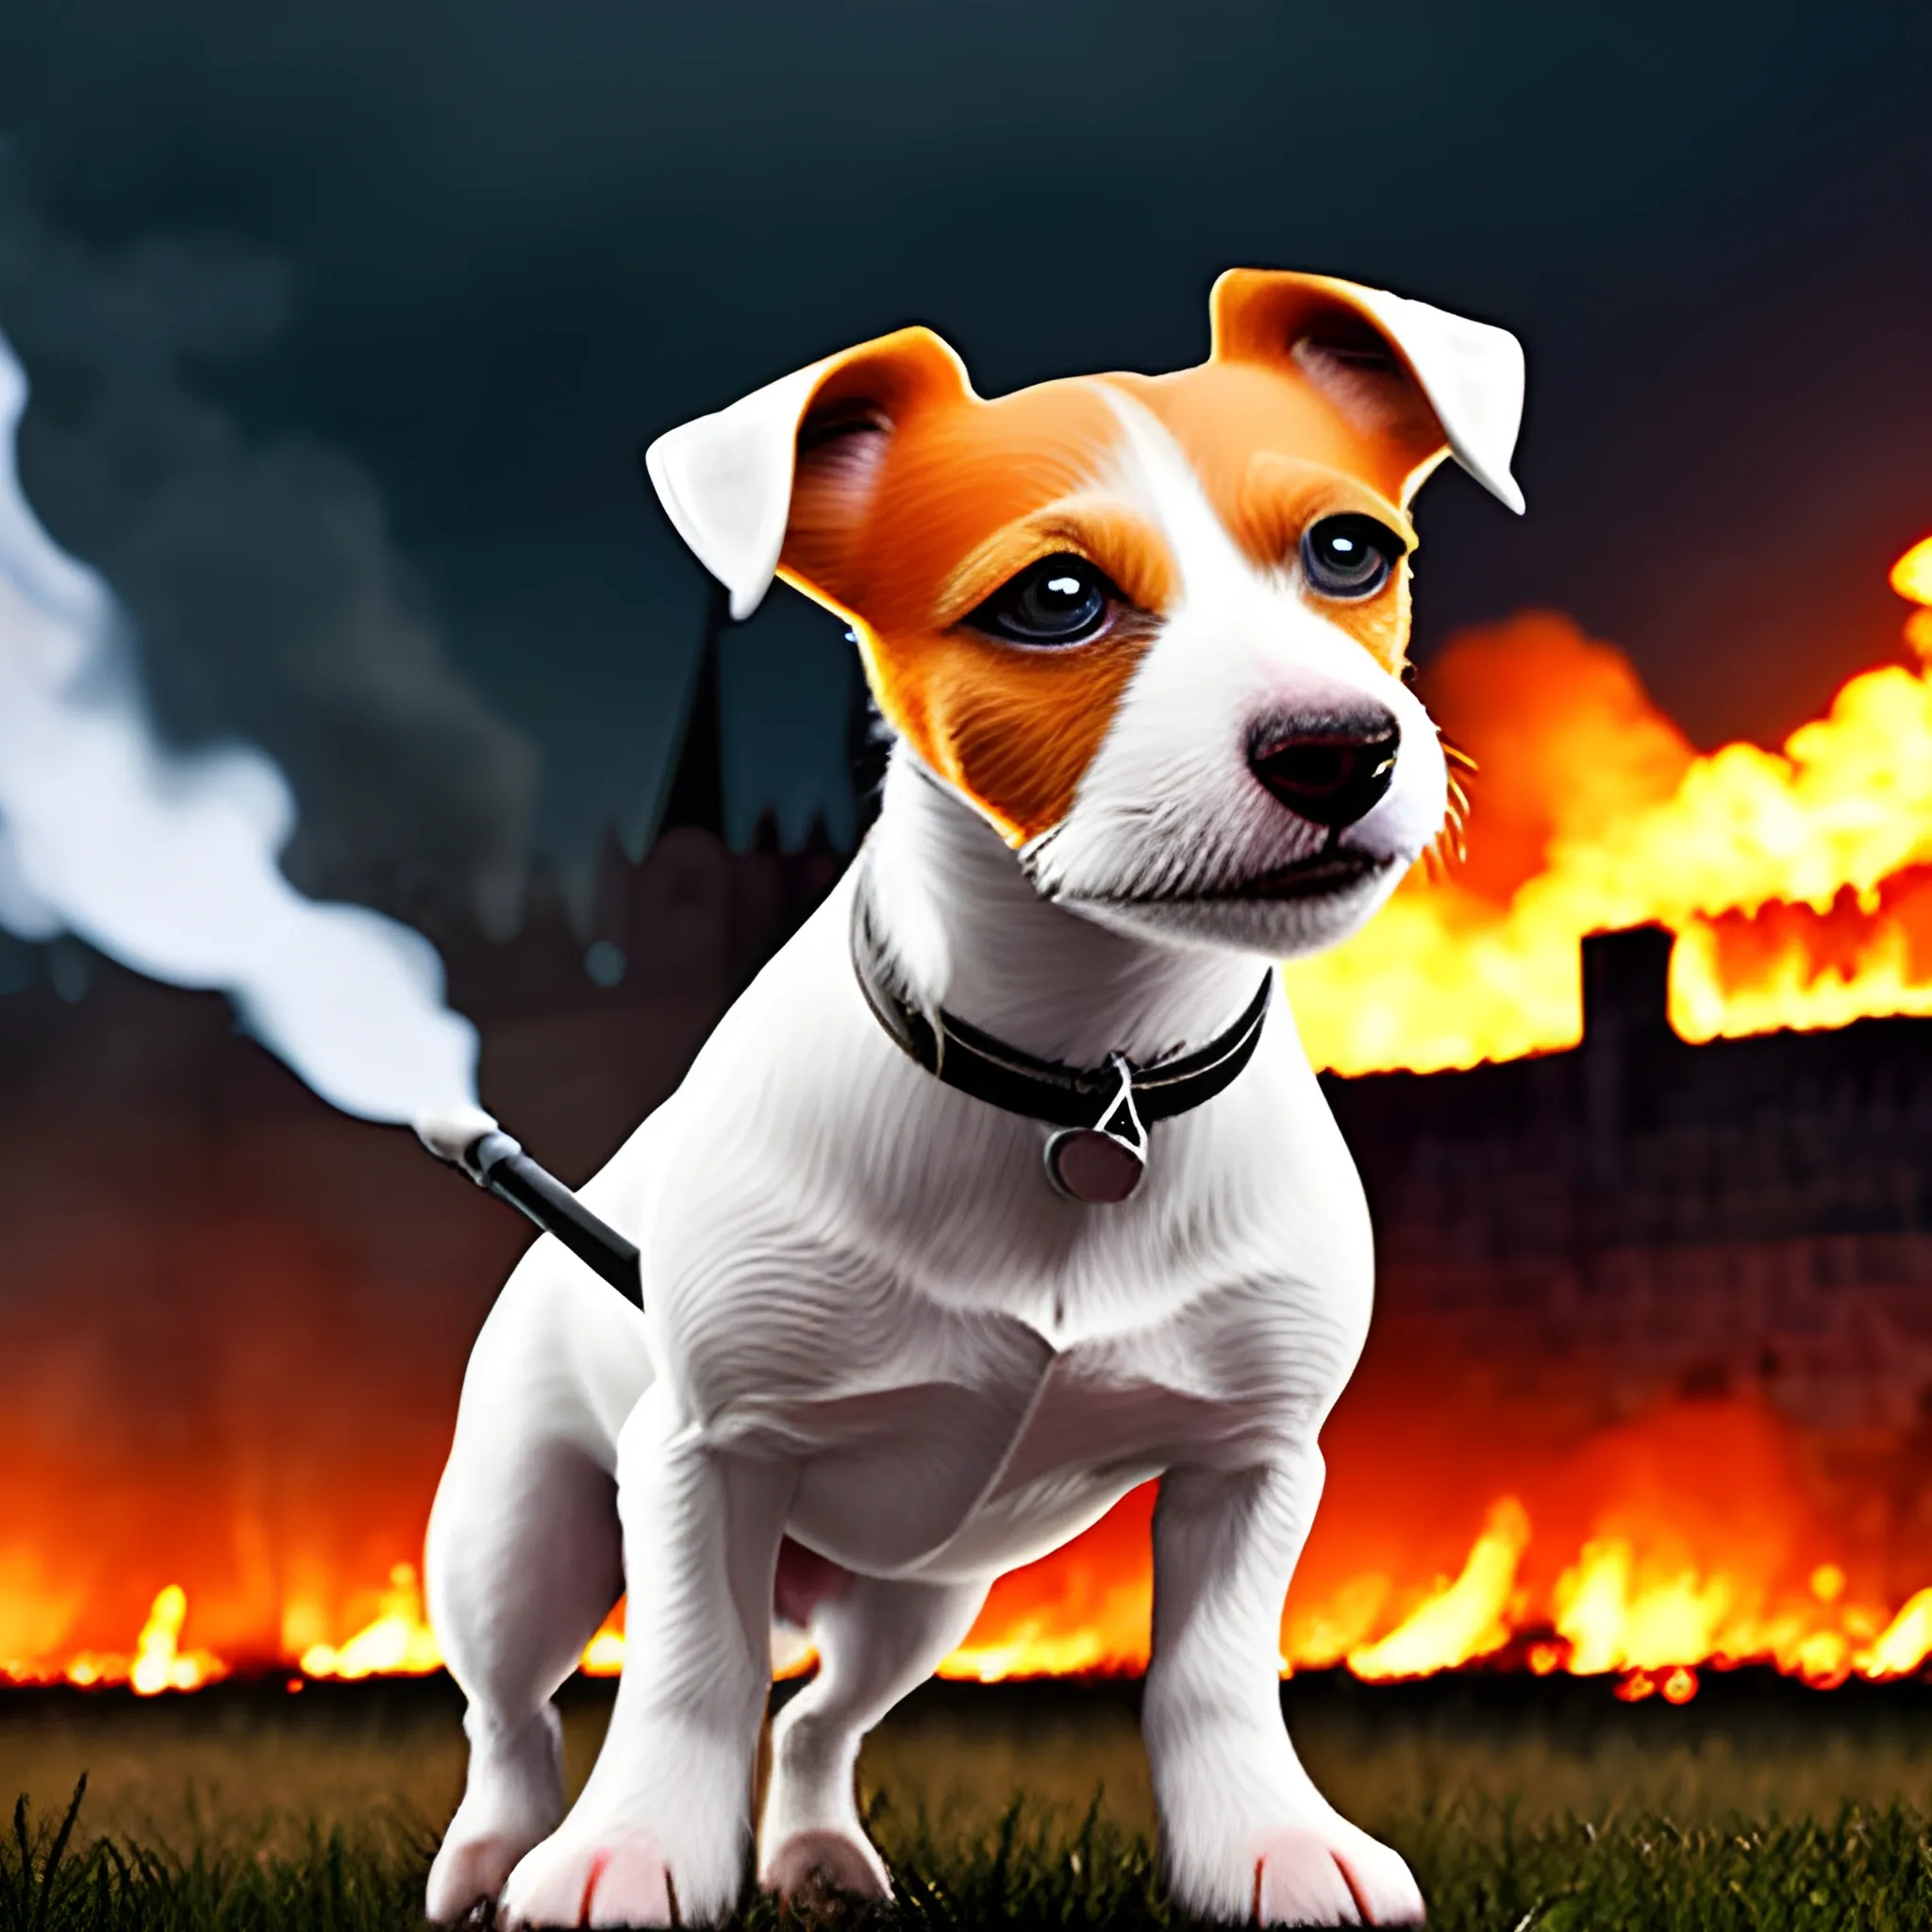 ukrainian jack russel terrier sets the Kremlin on fire, hyperrealistic, camerashot at night